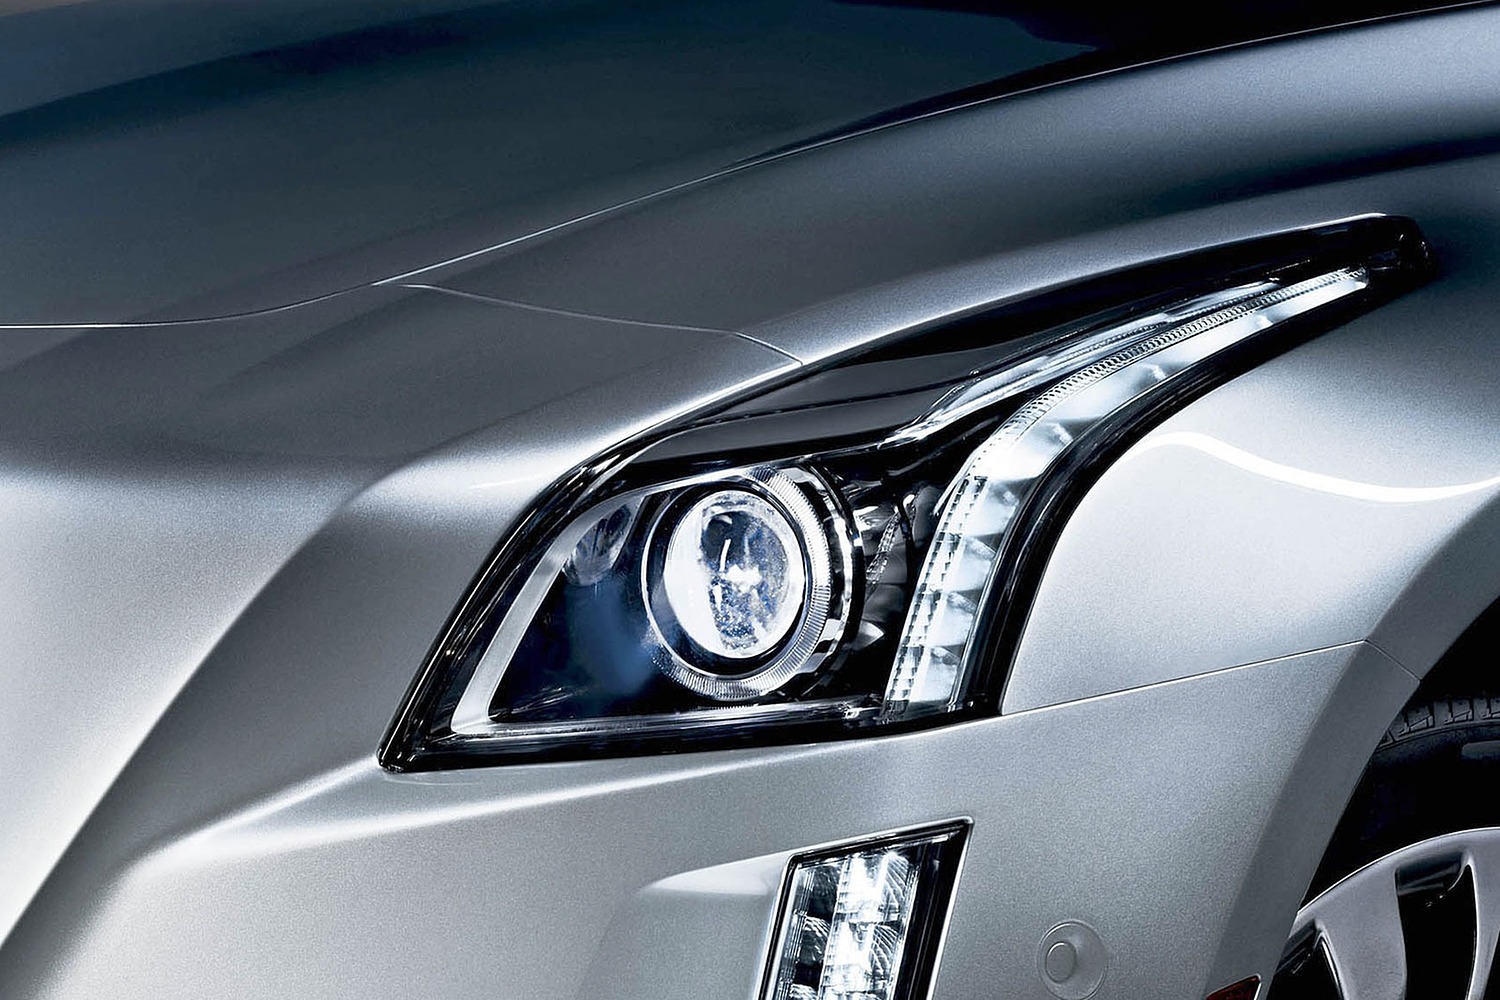 Cadillac CTS V-Sport Premium Luxury Sedan Exterior Detail (2017 model year shown)